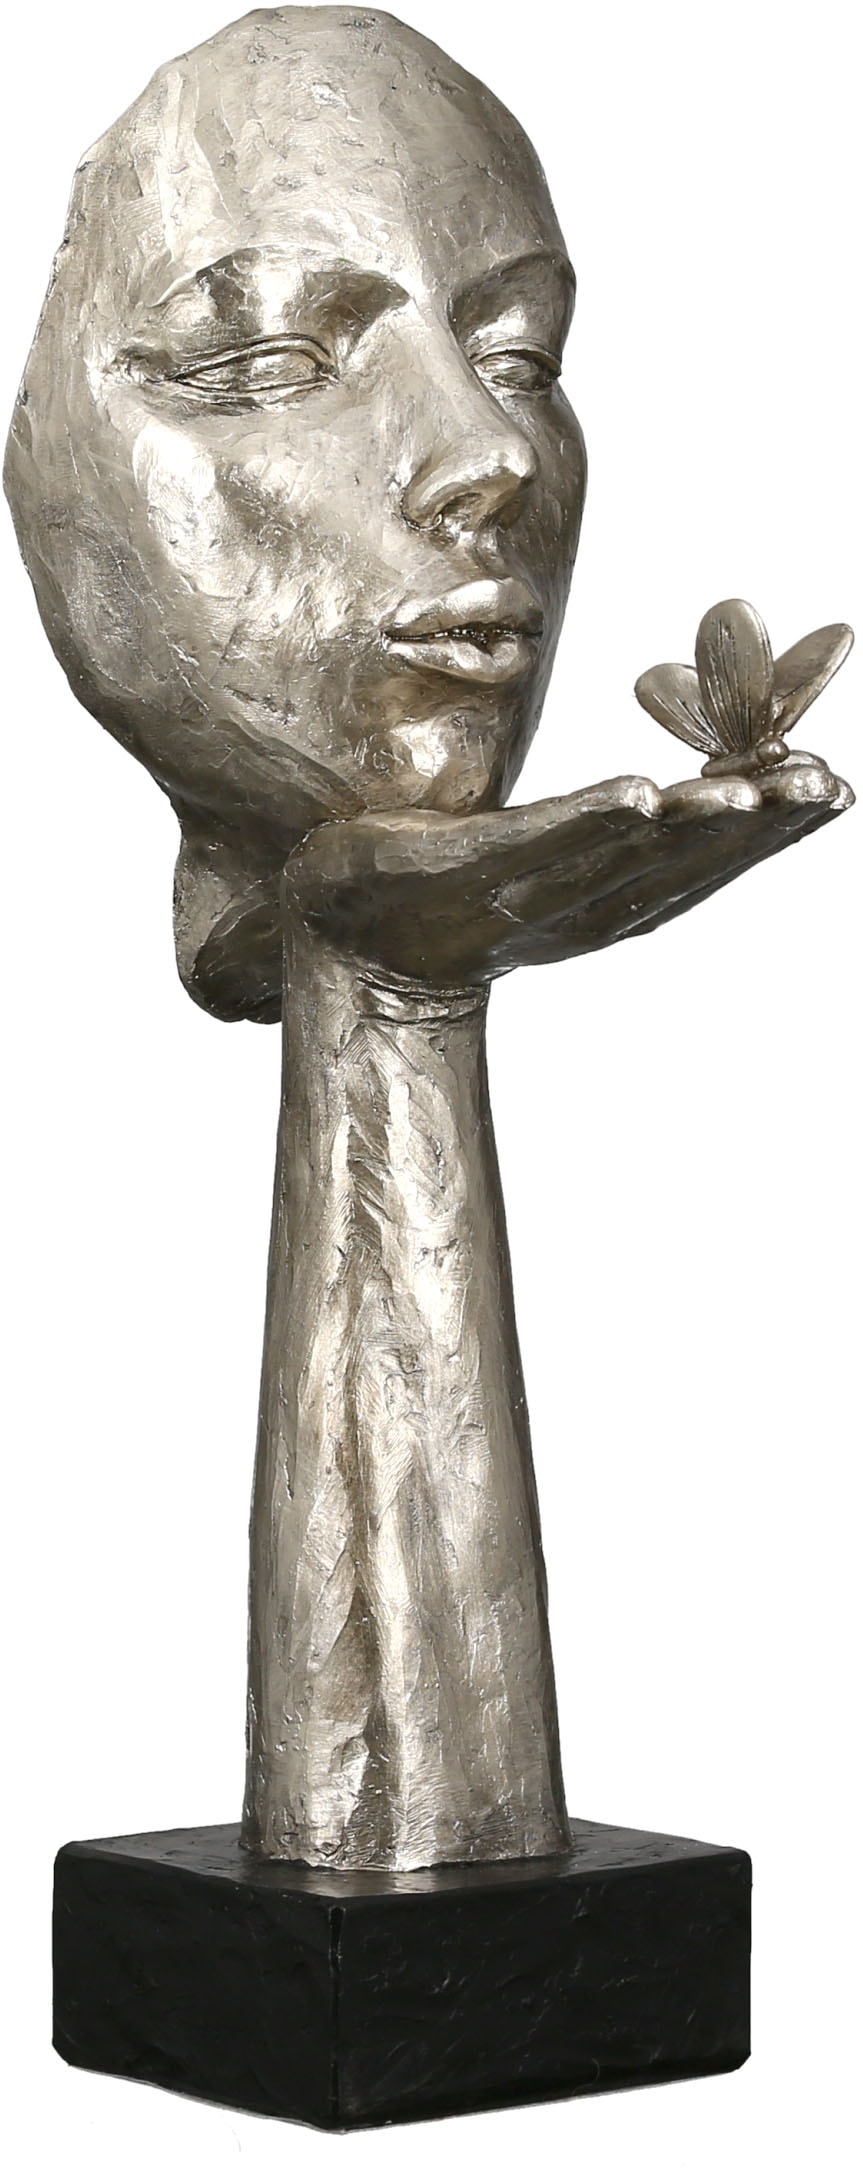 GILDE Dekofigur »Skulptur Desire, antikfinish« von Gilde